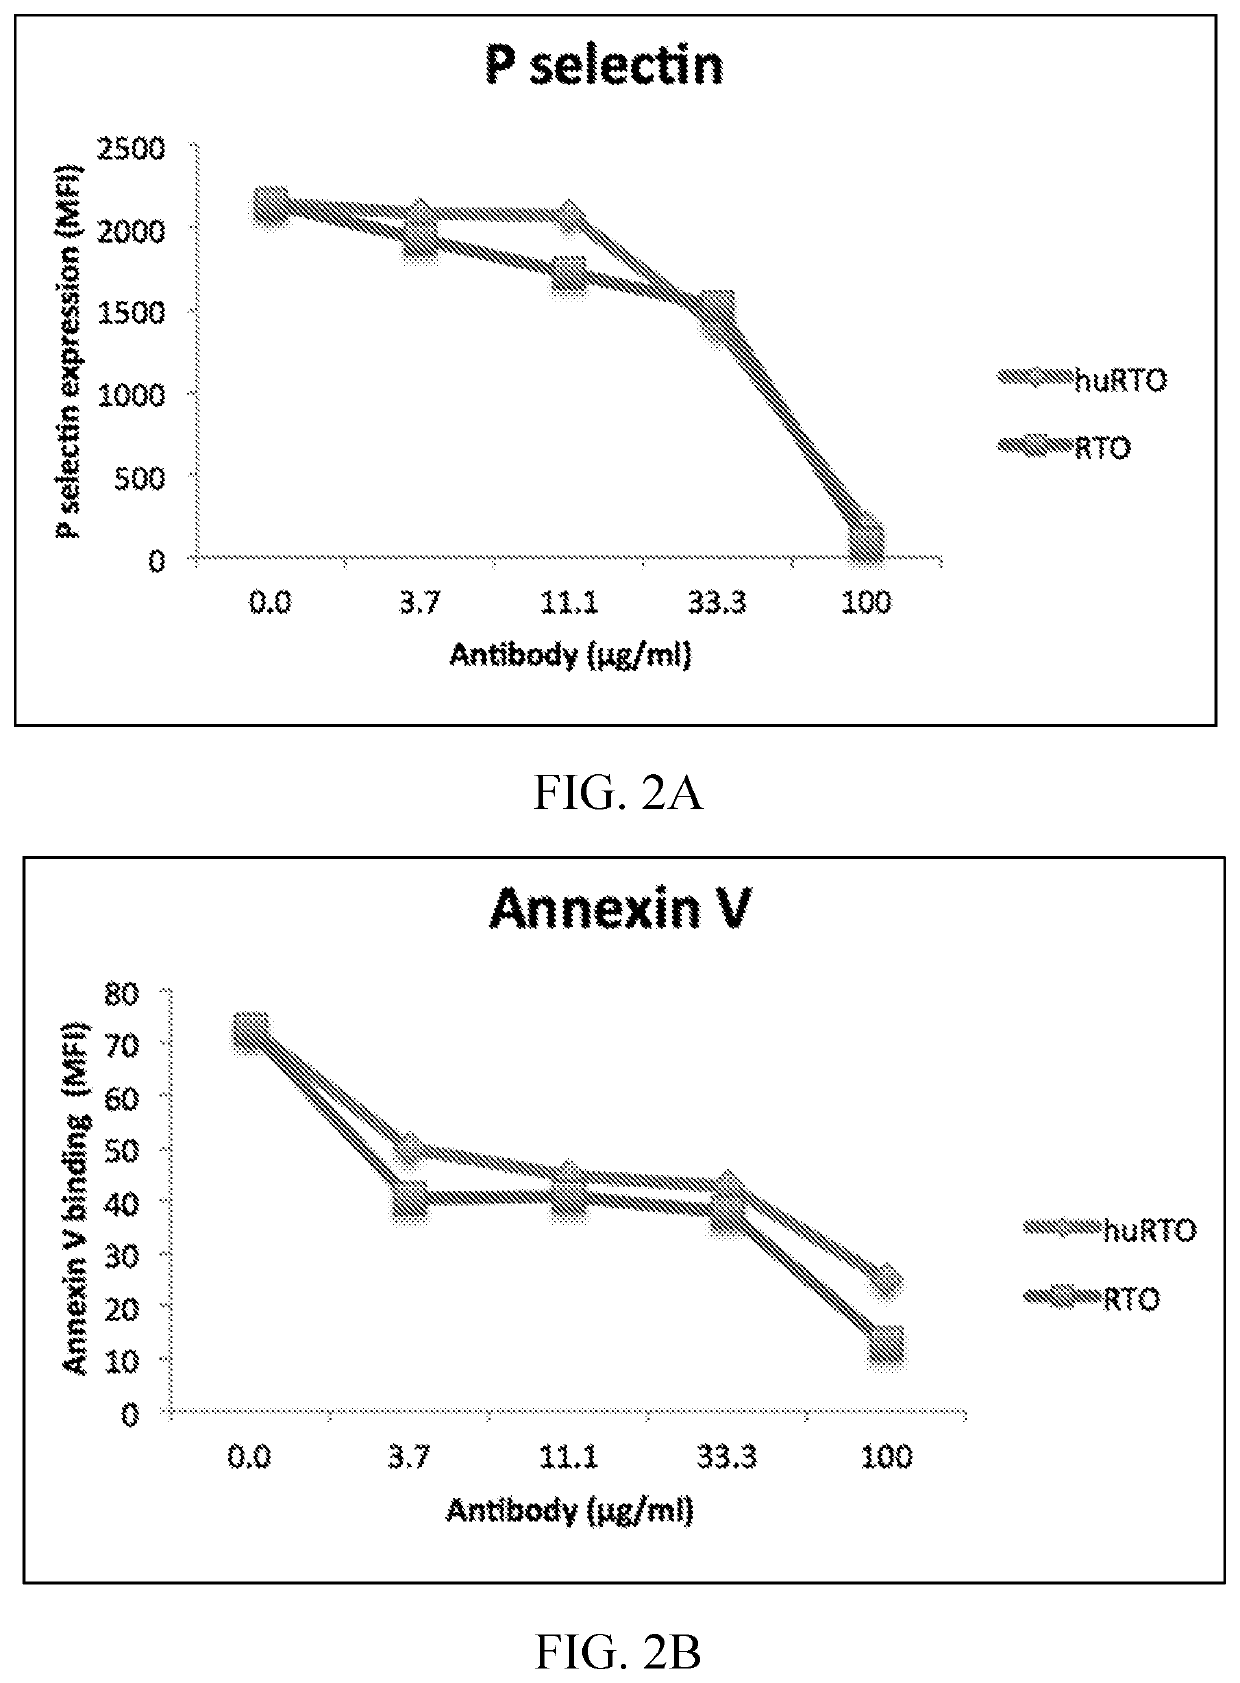 Fully humanized Anti-platelet factor 4 antibodies that treat heparin-induced thrombocytopenia